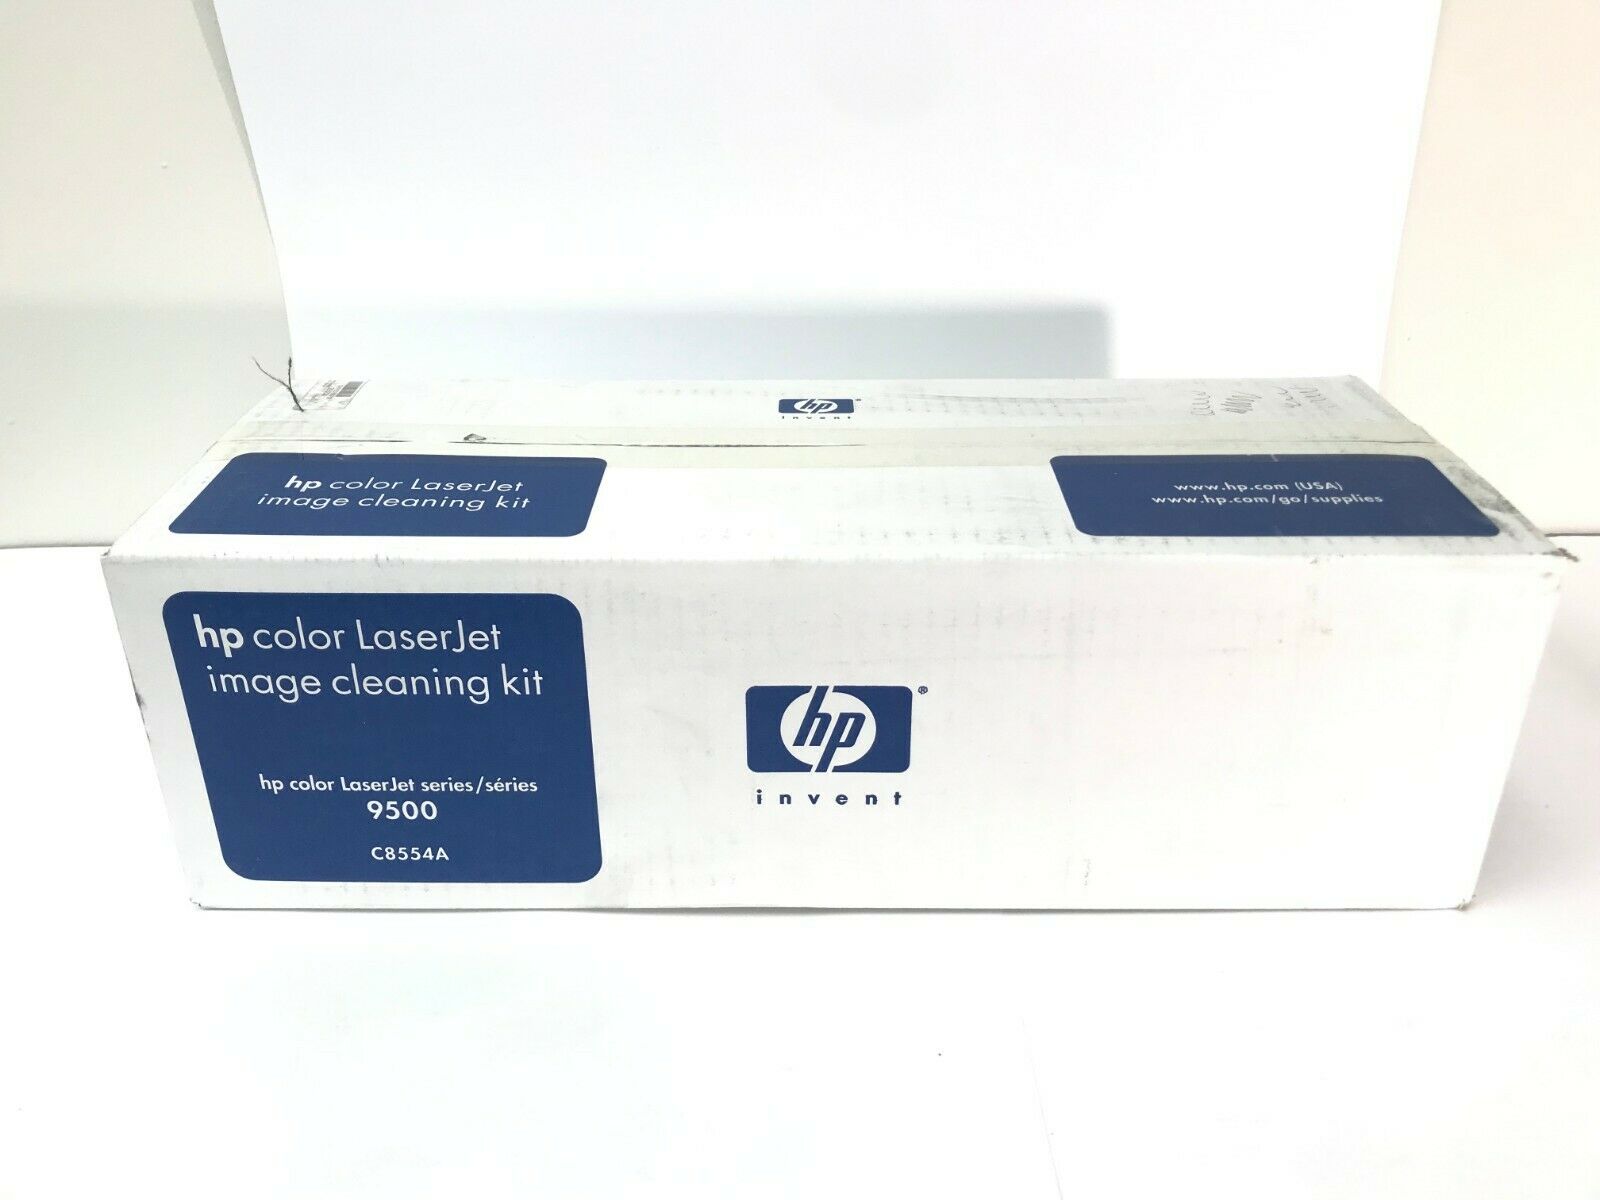 HP C8554A color LaserJet image cleaning kit